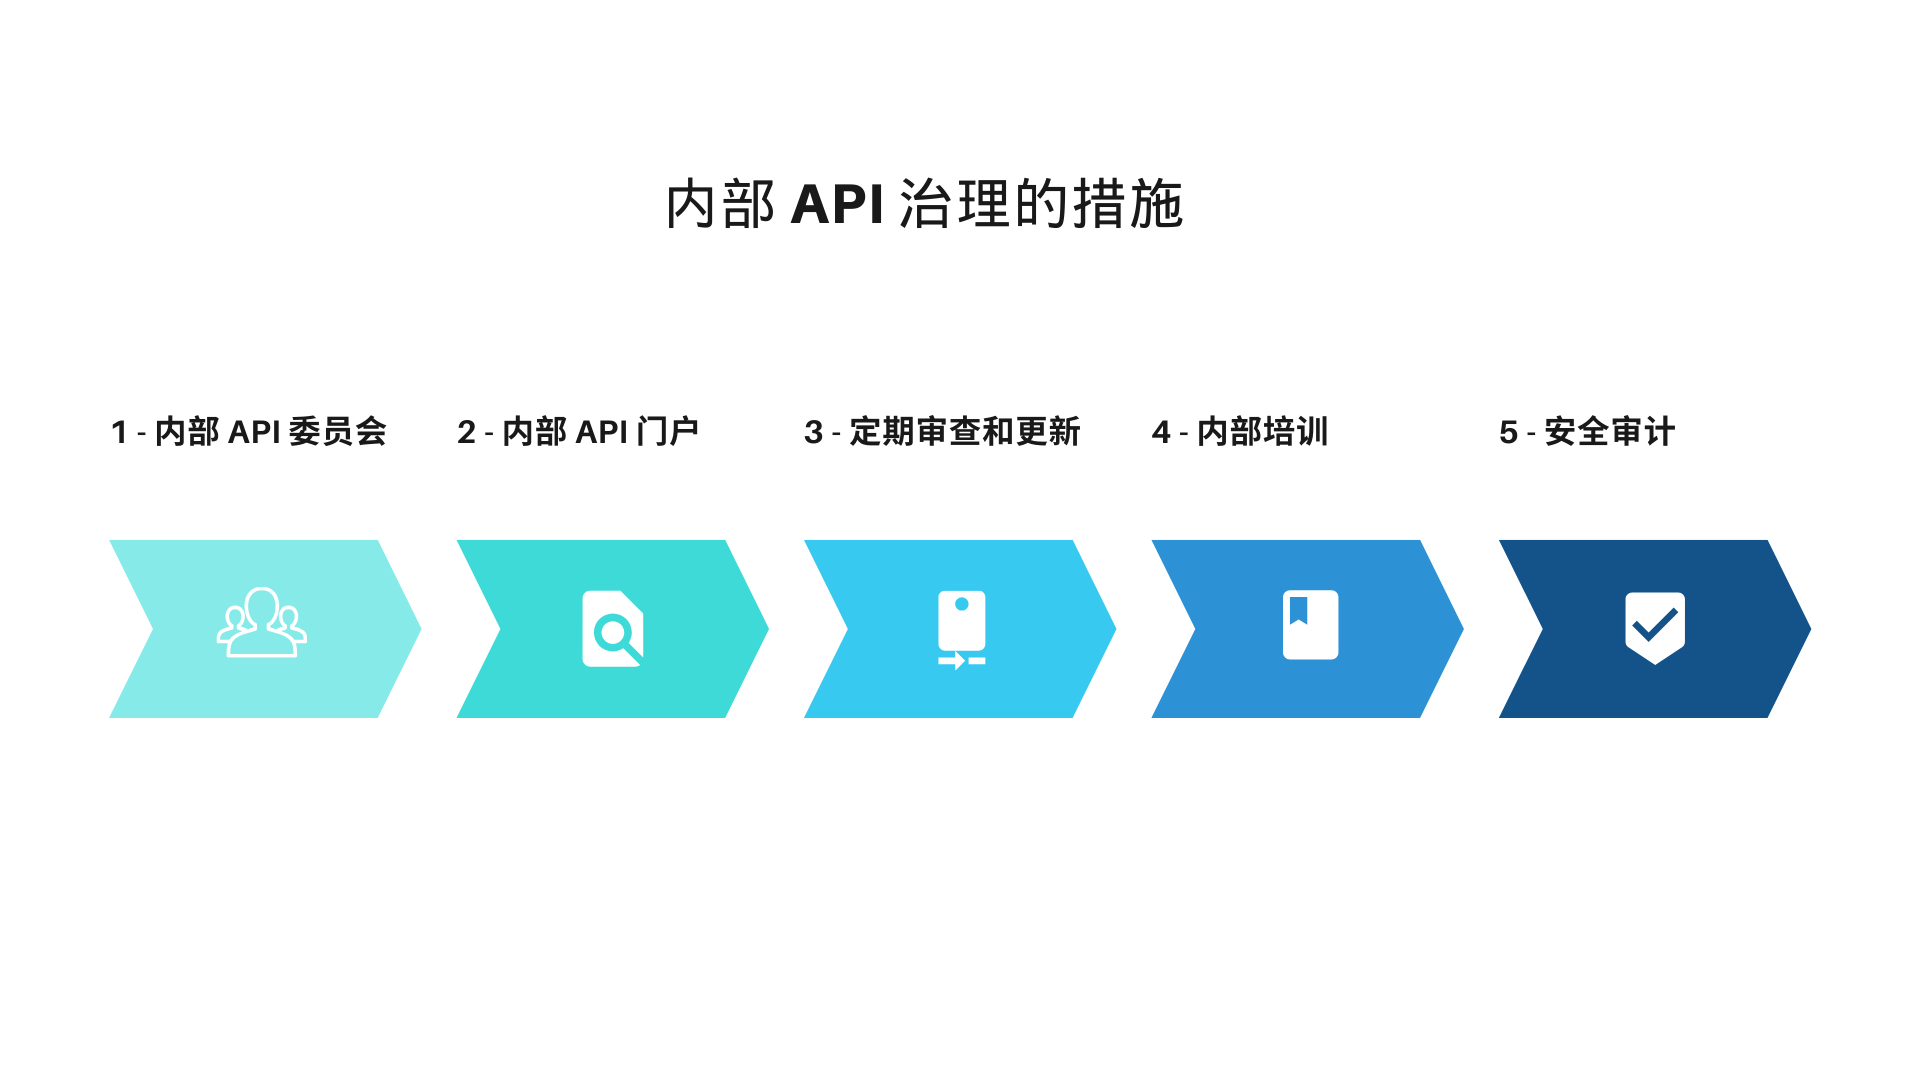 measures of internal API governance